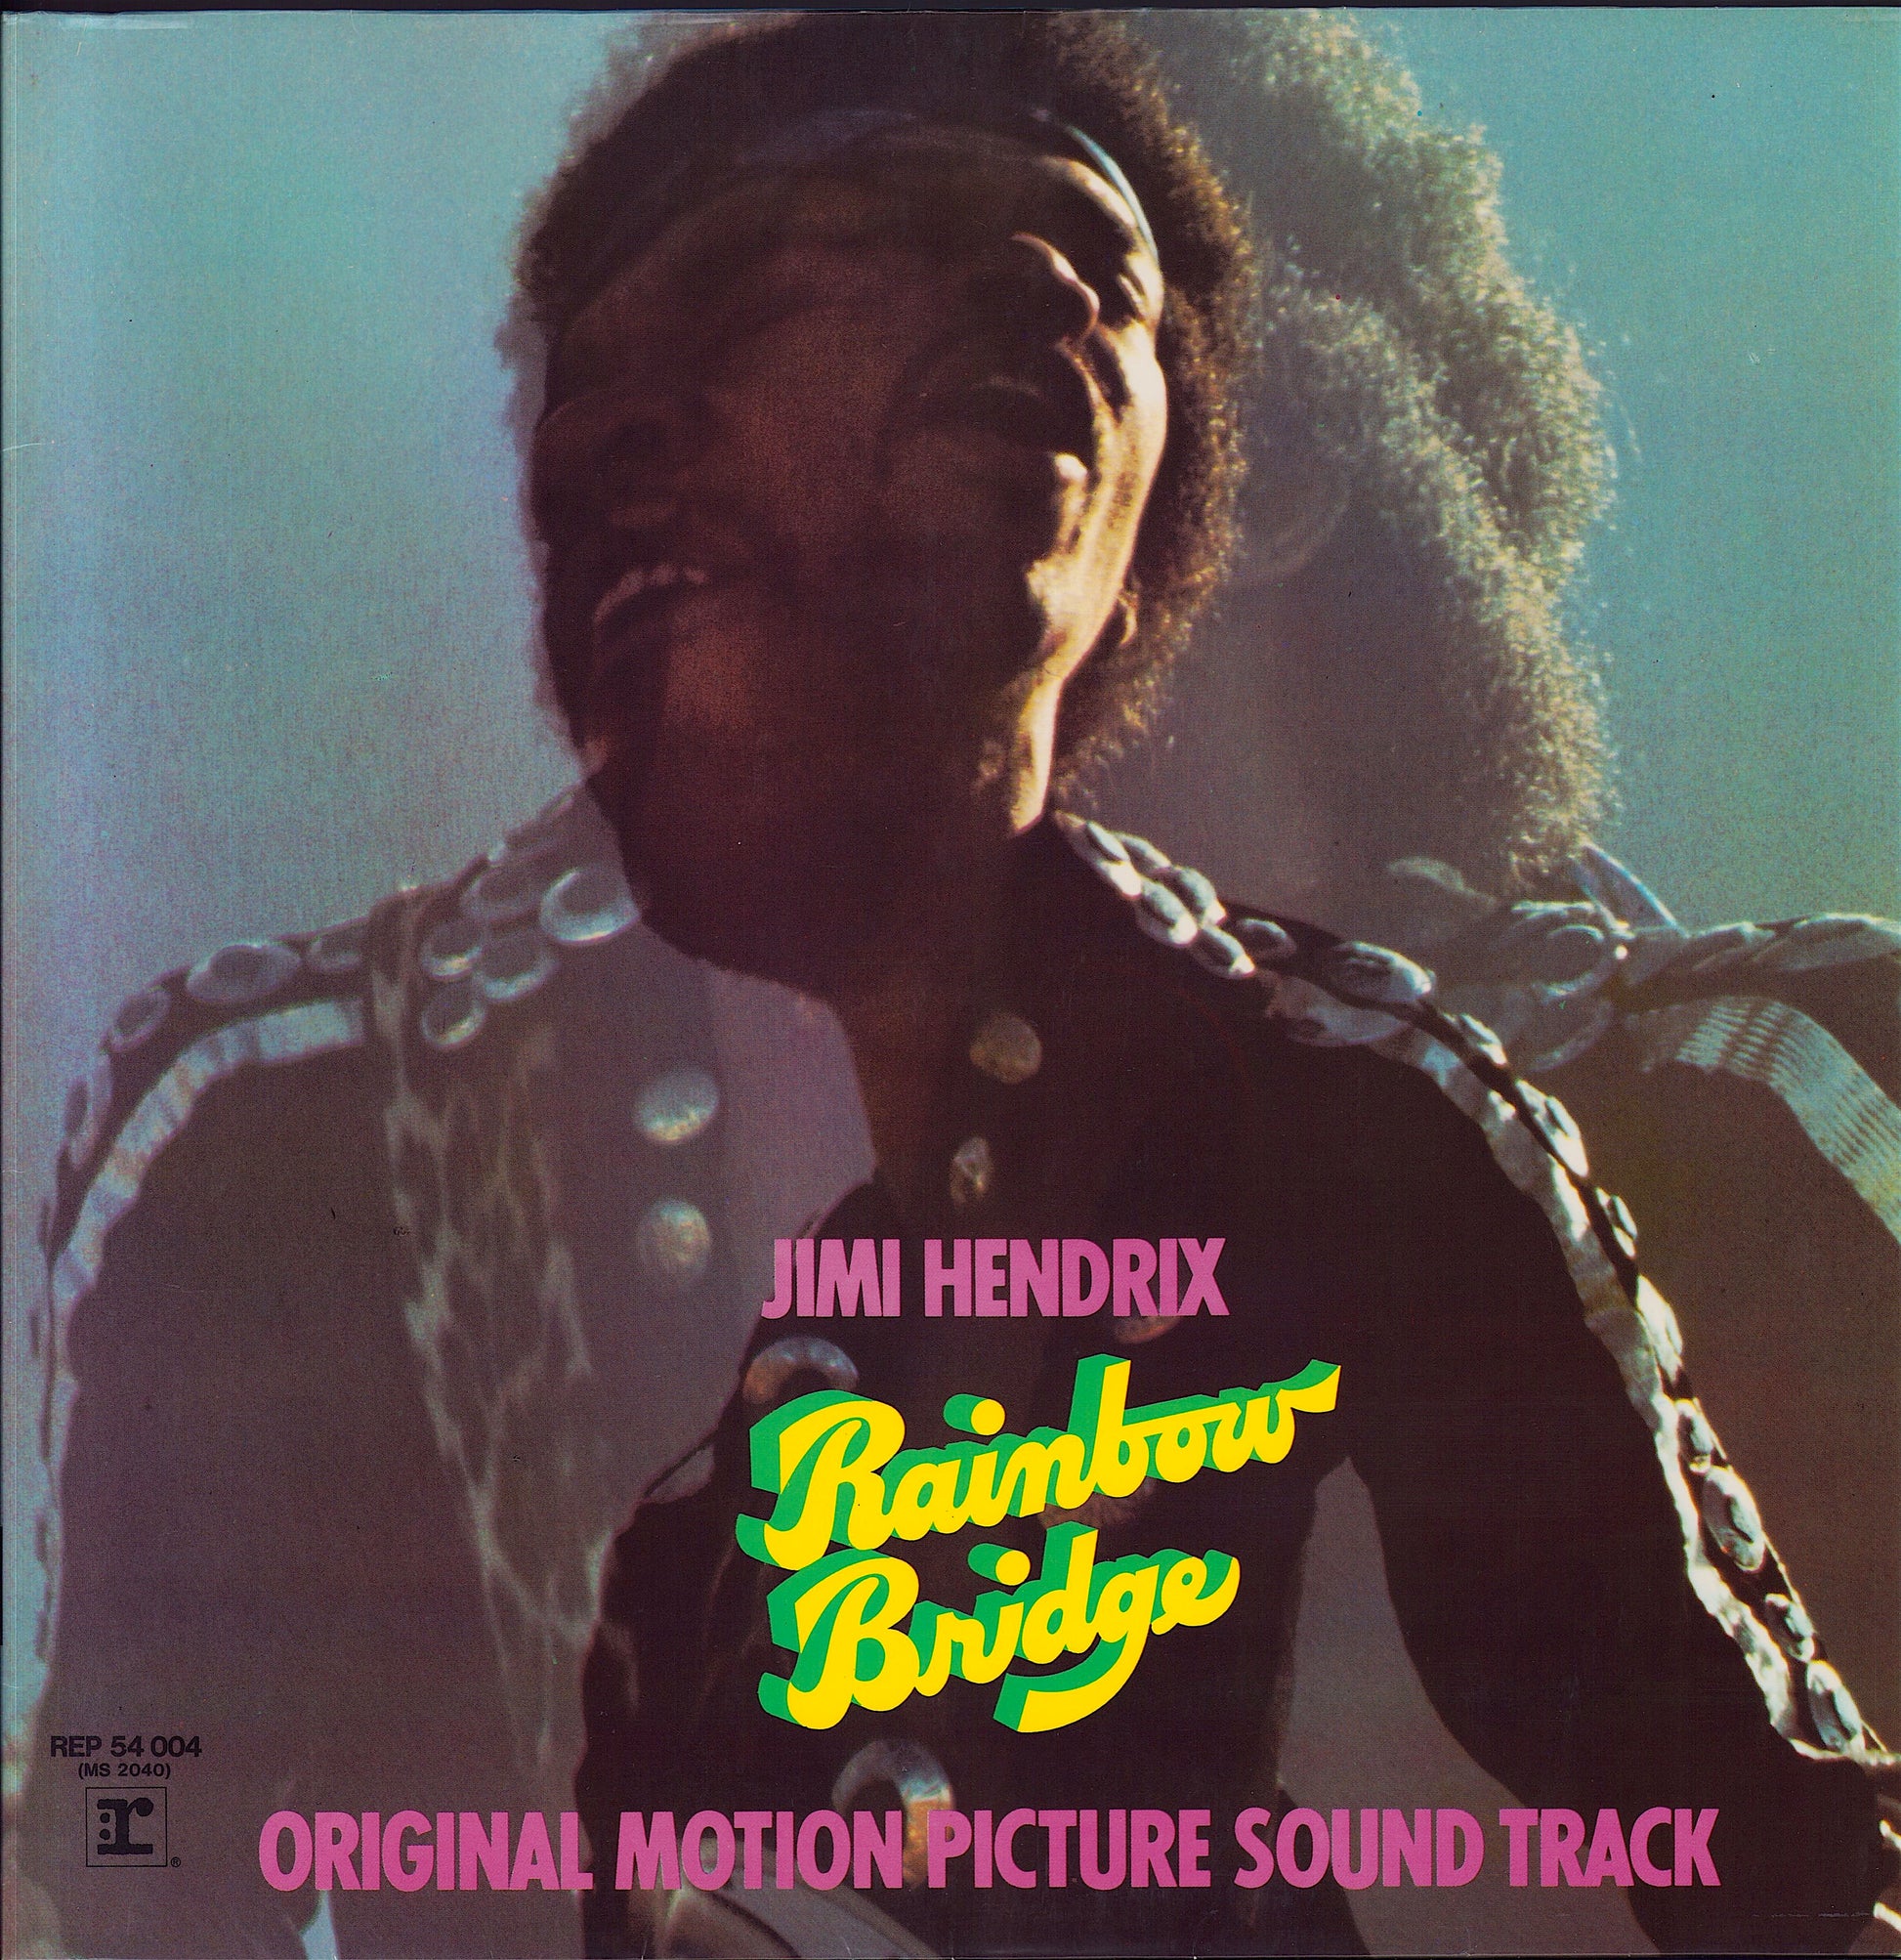 Jimi Hendrix ‎- Rainbow Bridge - Original Motion Picture Sound Track (Vinyl LP)